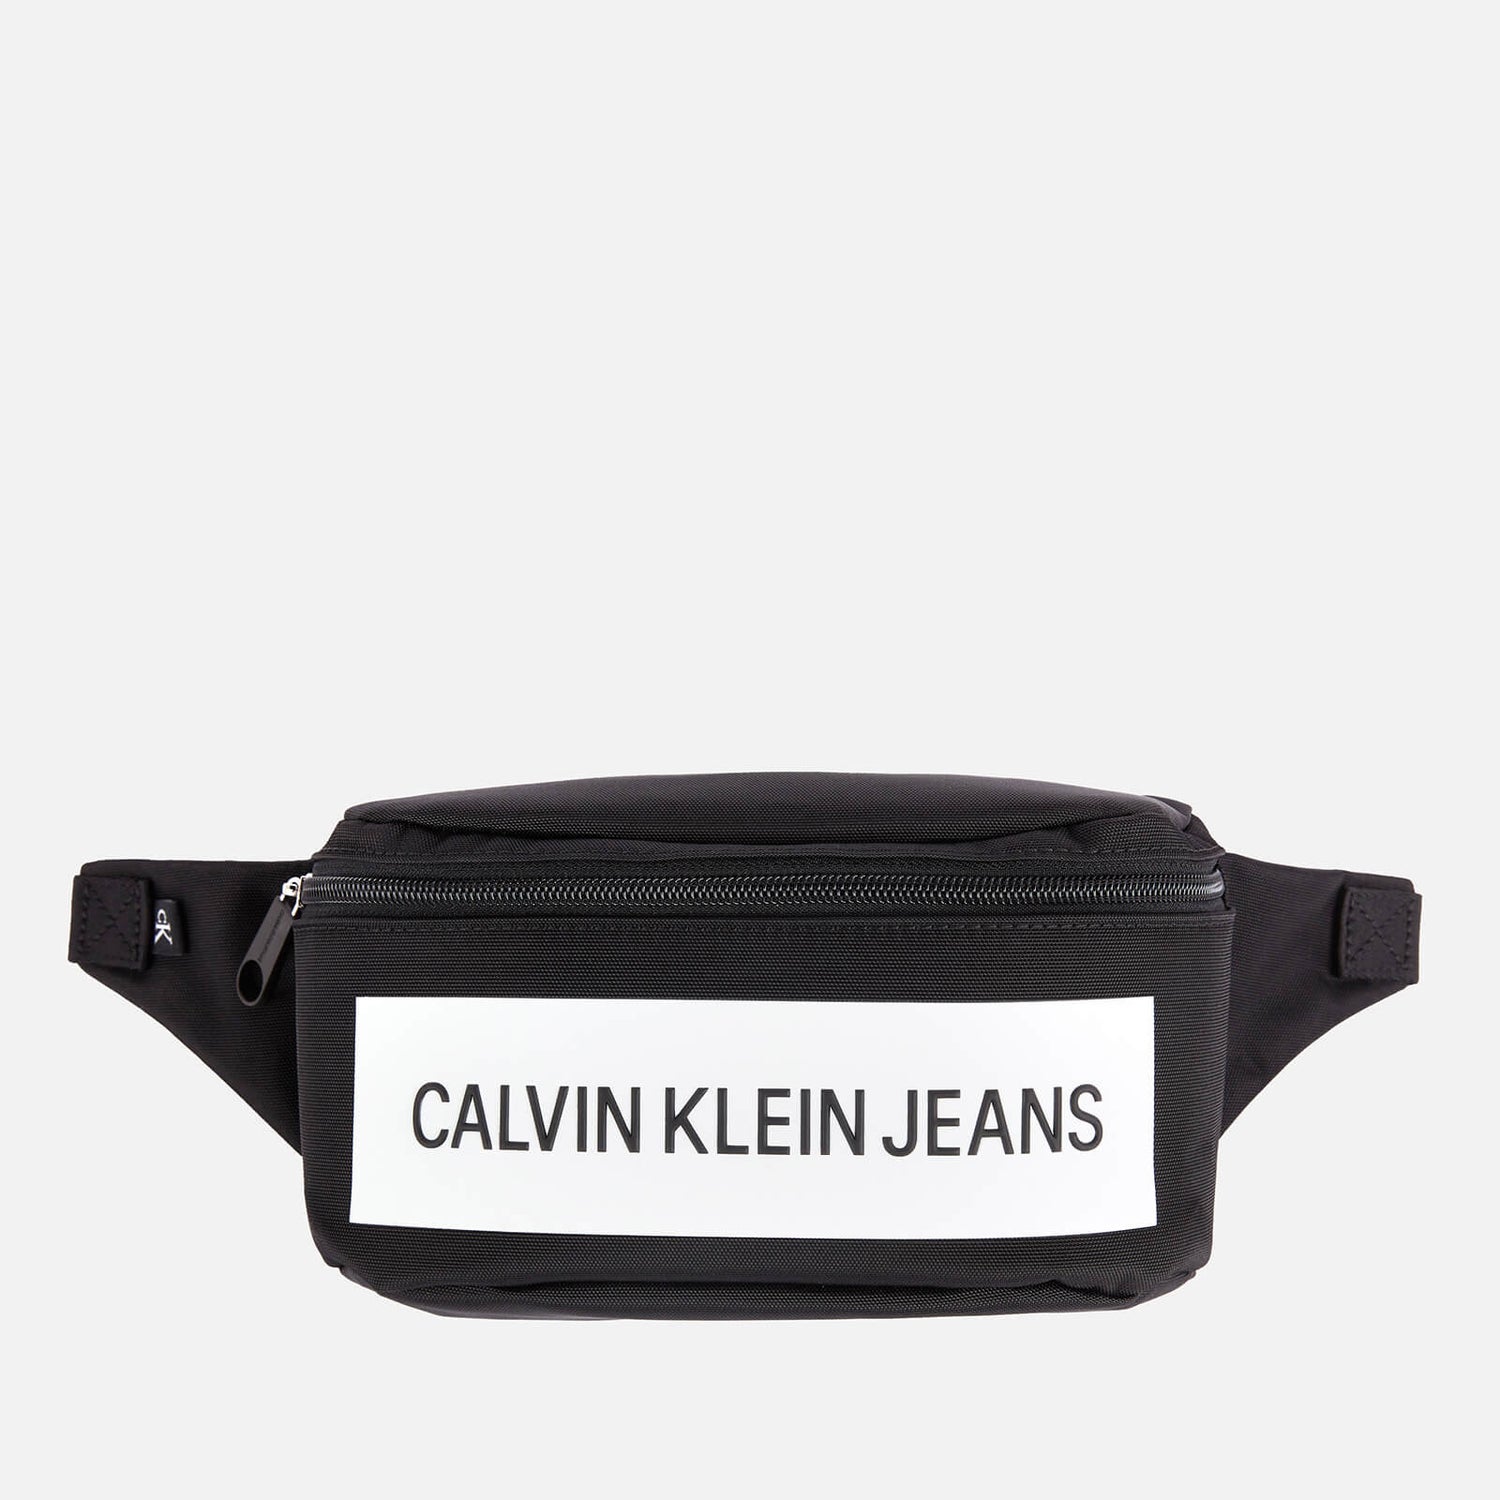 Calvin Klein Jeans Men's Waistbag - Black